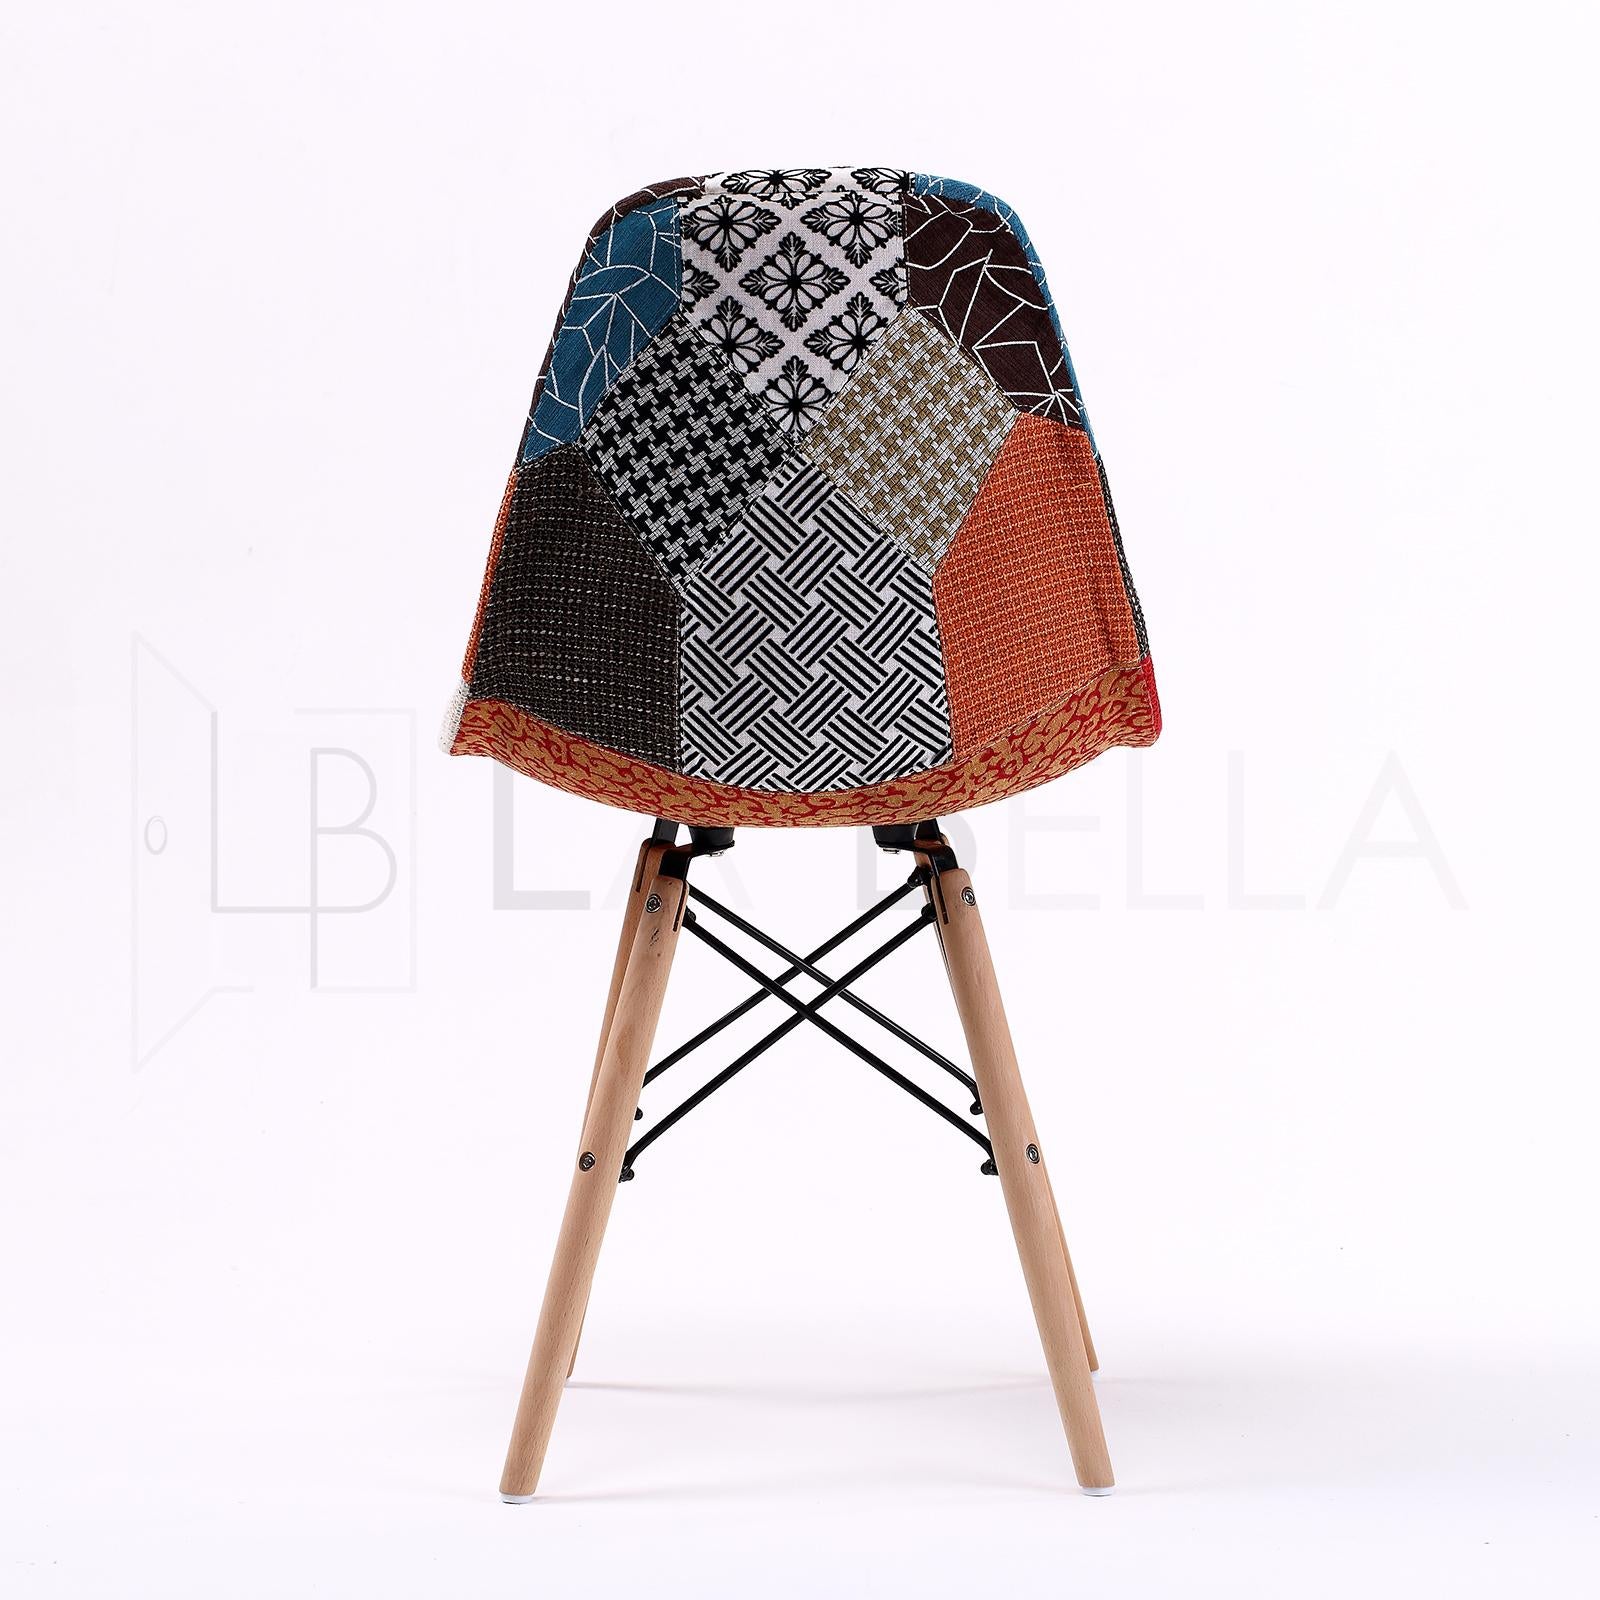 La Bella 4 Set Multi Colour Retro Dining Cafe Chair DSW Fabric